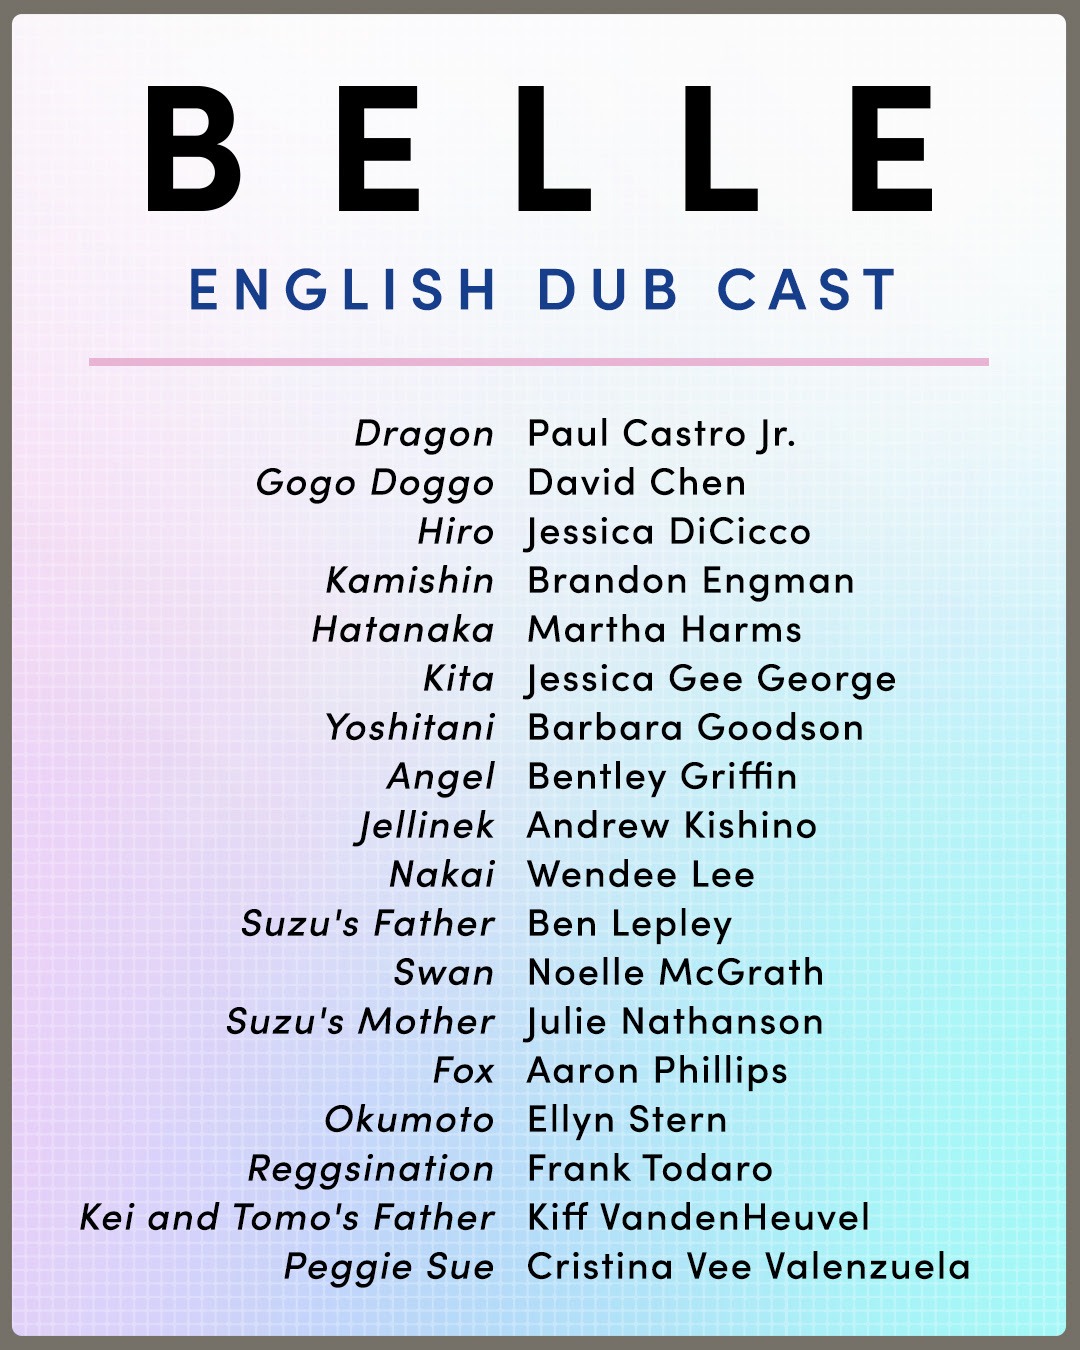 Belle and Sebastian Japanese TV series  Wikipedia